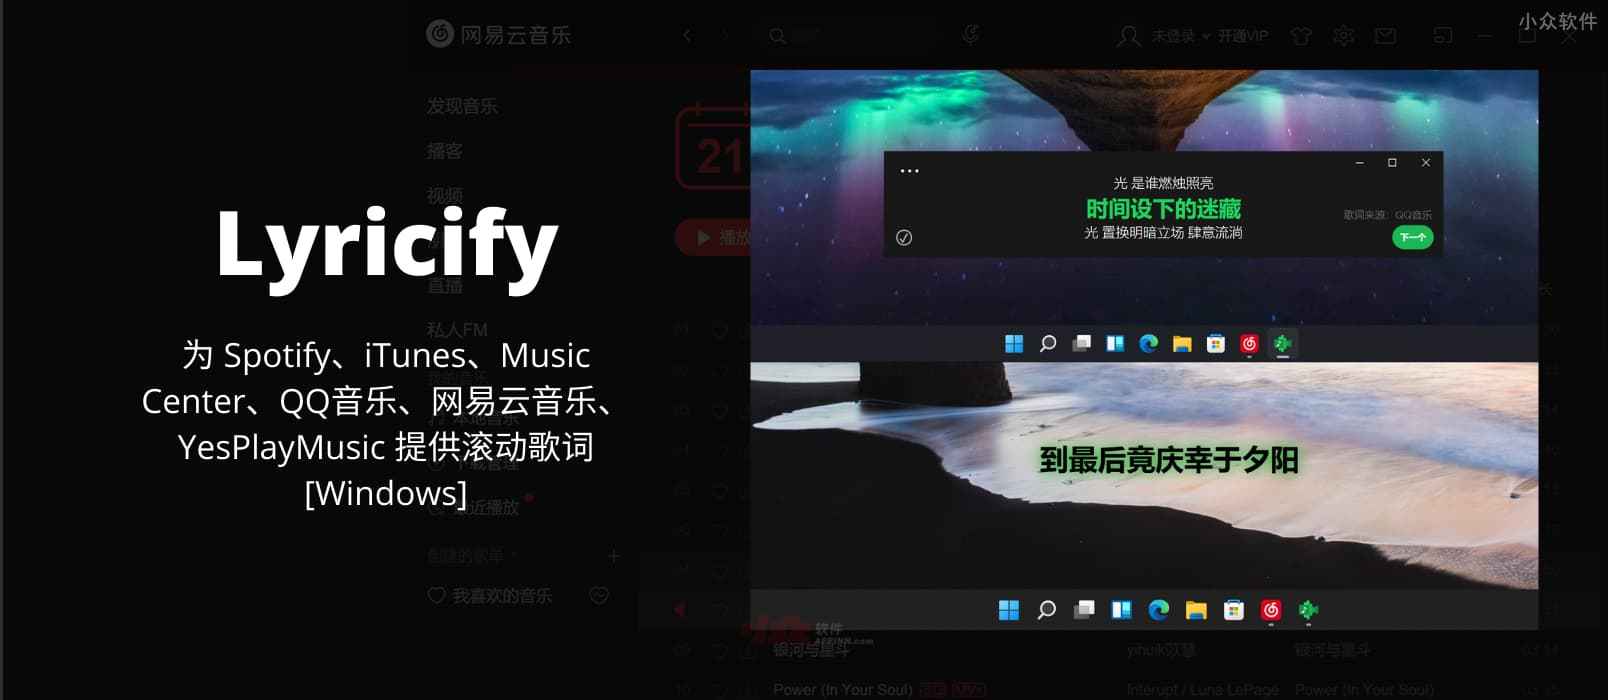 Lyricify – 为 Spotify、iTunes、Music Center、QQ音乐、网易云音乐、YesPlayMusic 提供滚动歌词[Wi